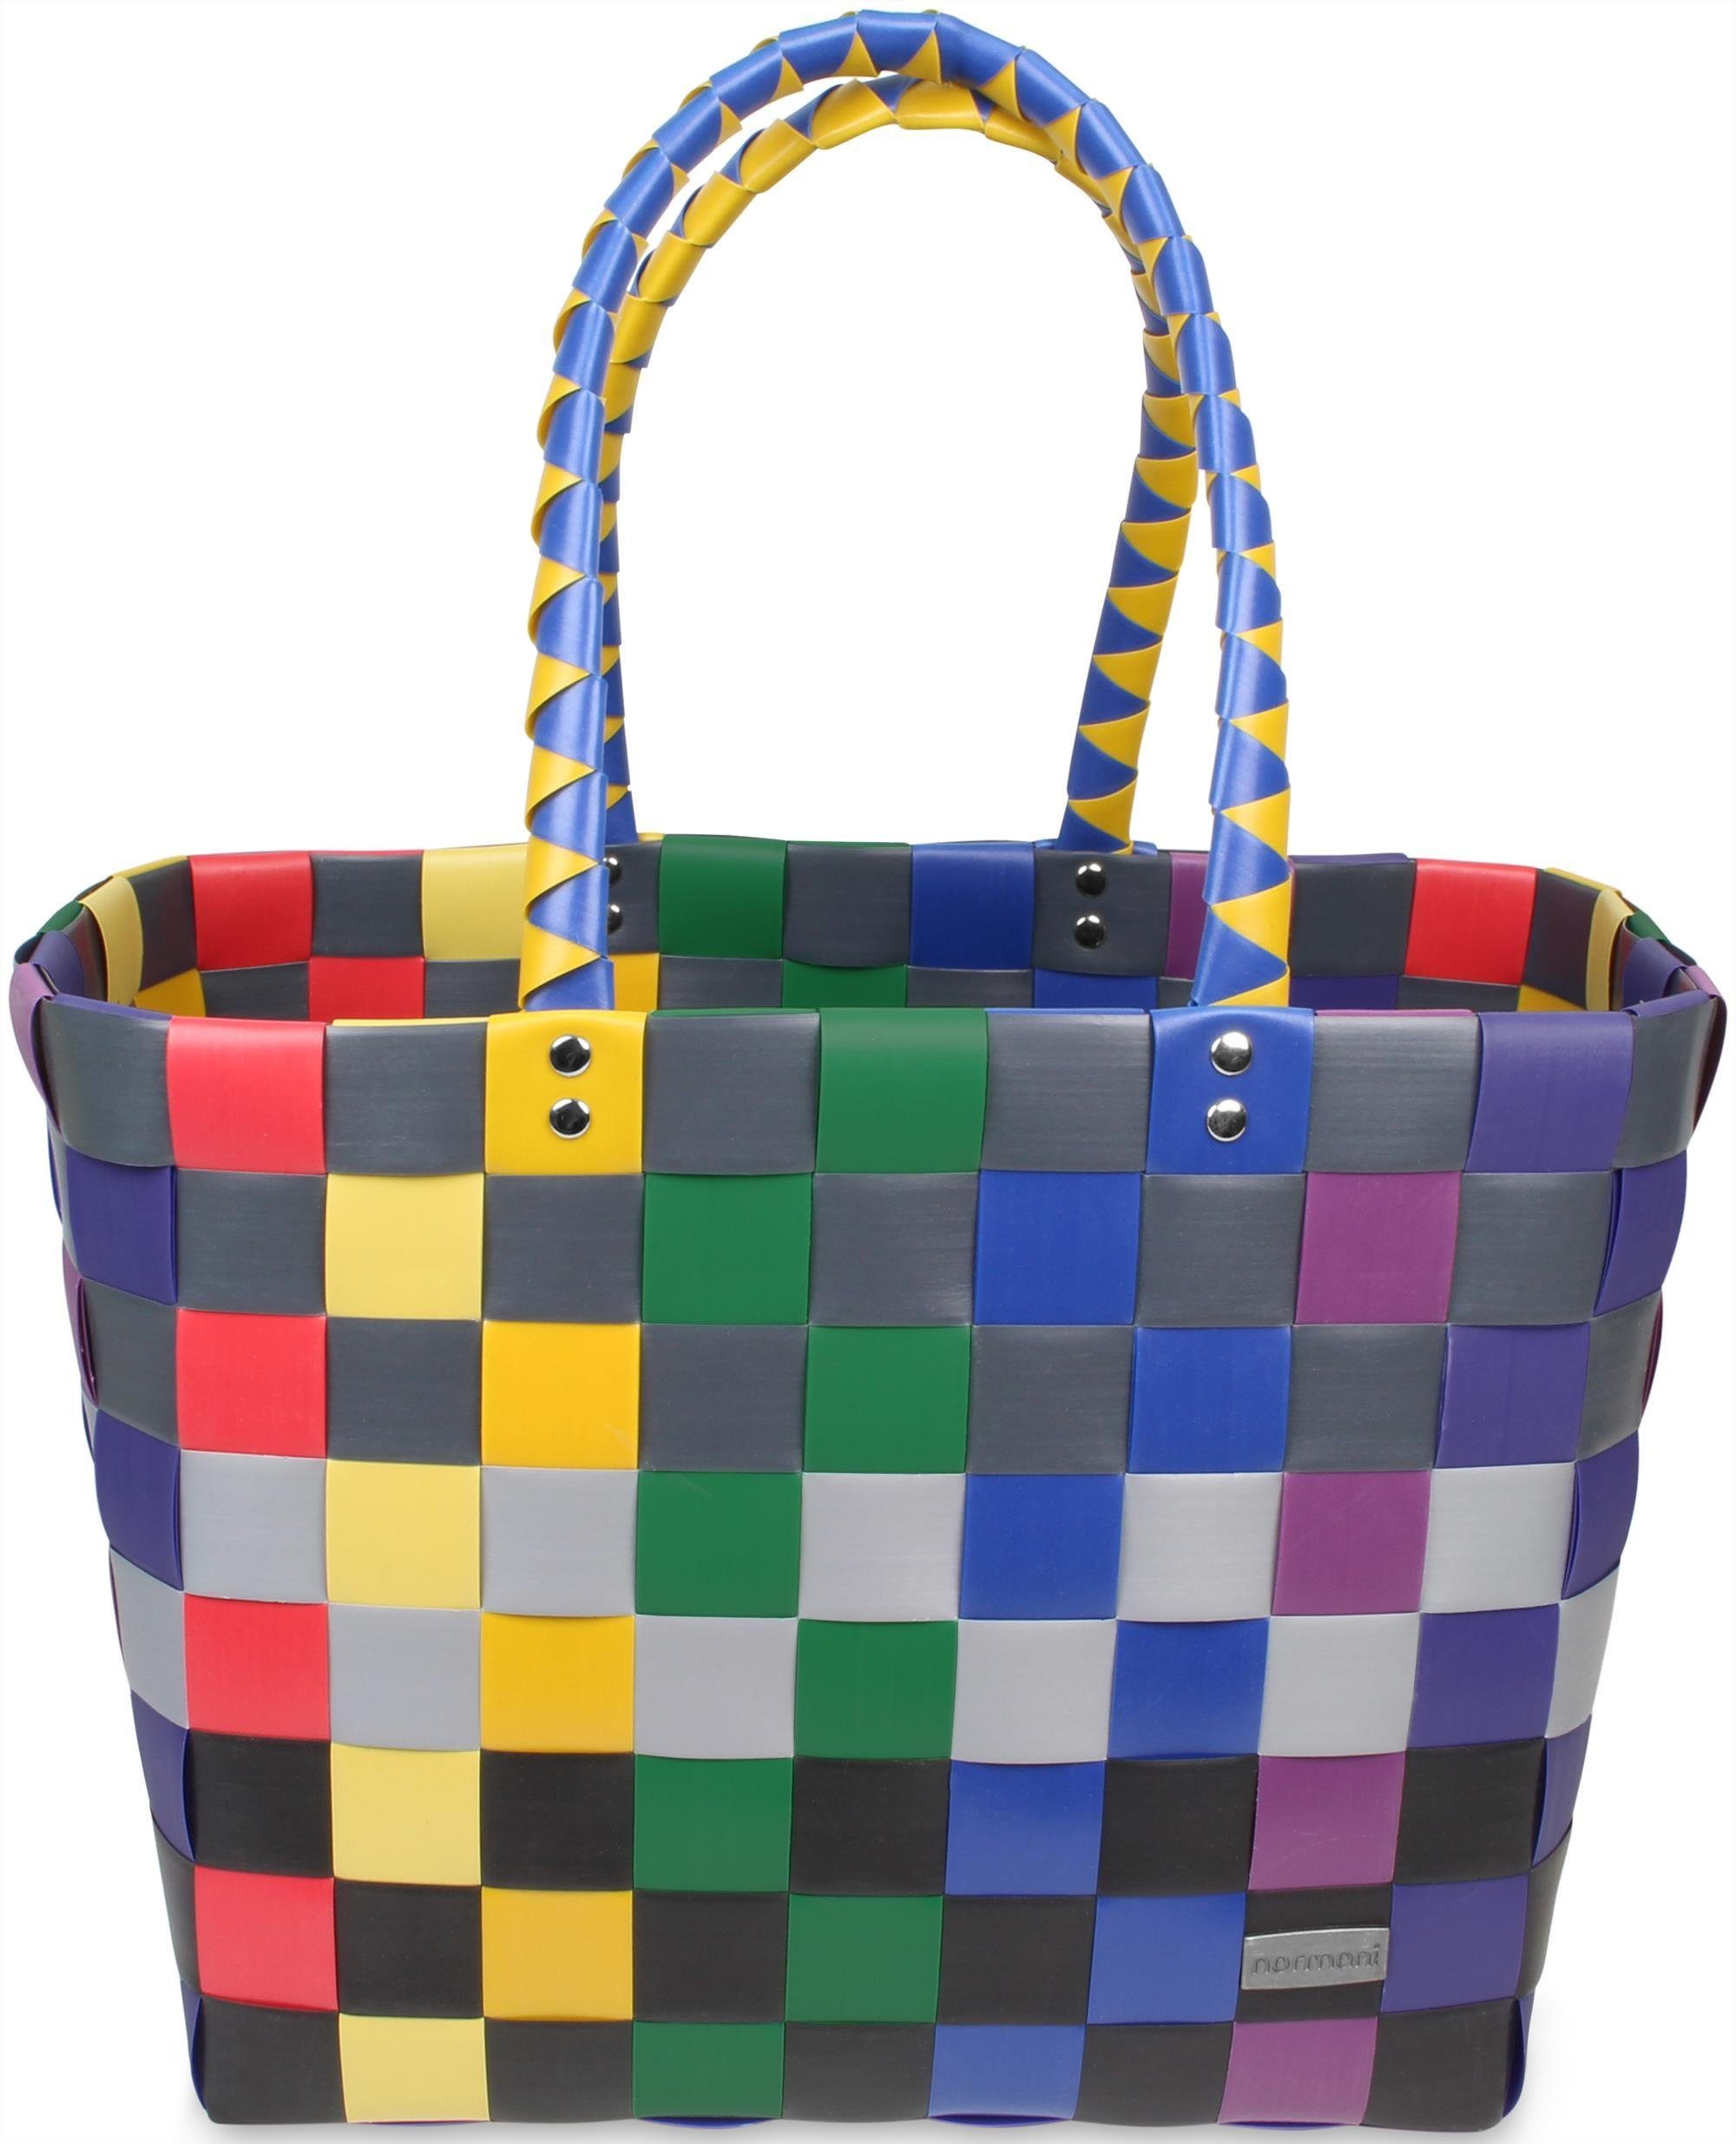 normani Einkaufskorb Einkaufskorb Einkaufstasche aus Kunststoff, 20 l, Flechtkorb aus pflegeleichtem Material Rainbow